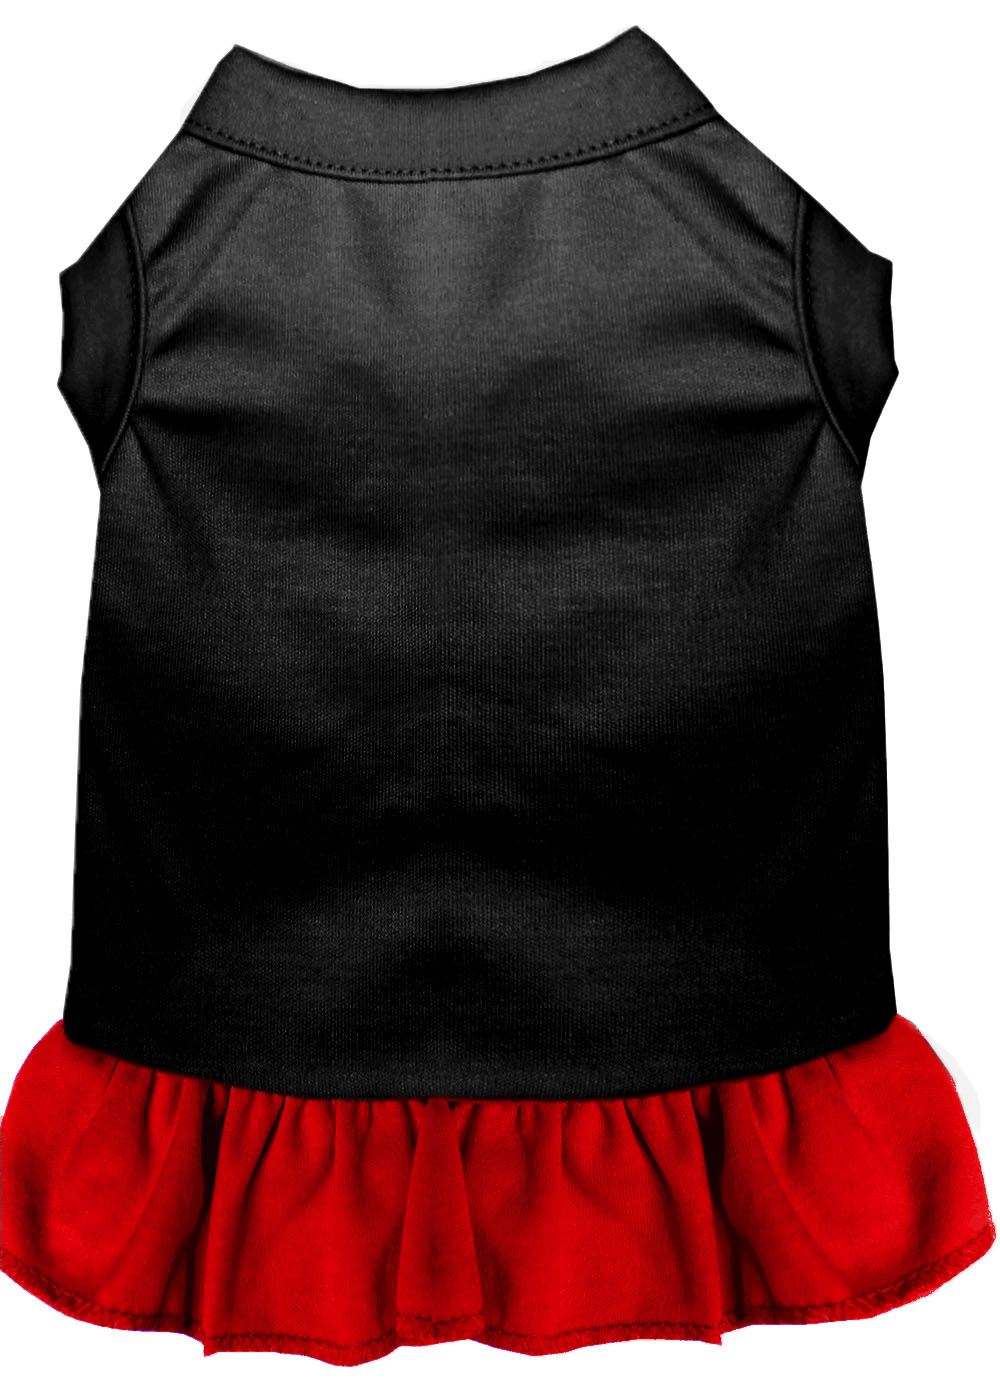 Plain Pet Dress Black with Red Sm